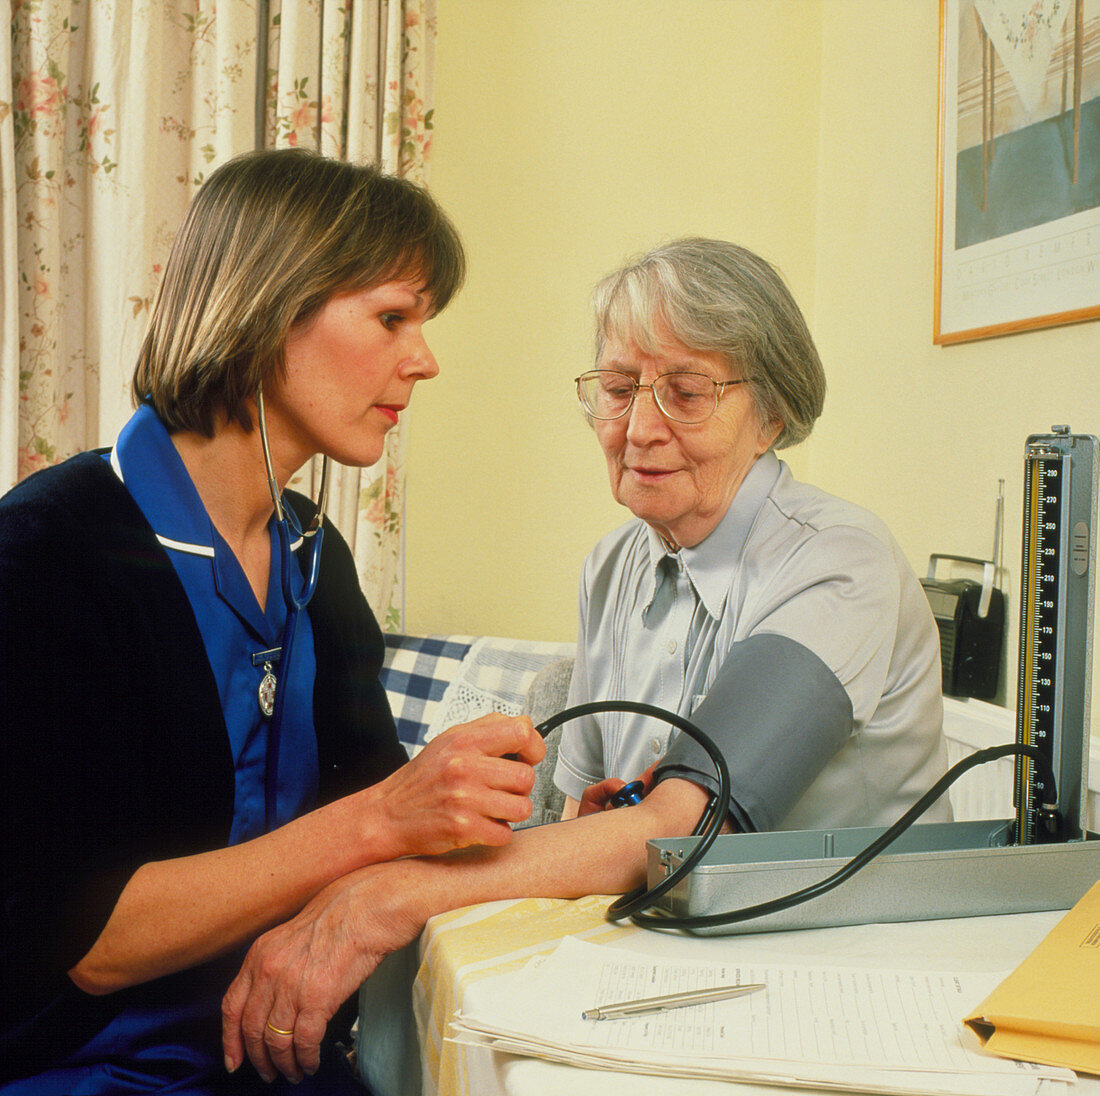 District nurse takes blood pressure of old woman